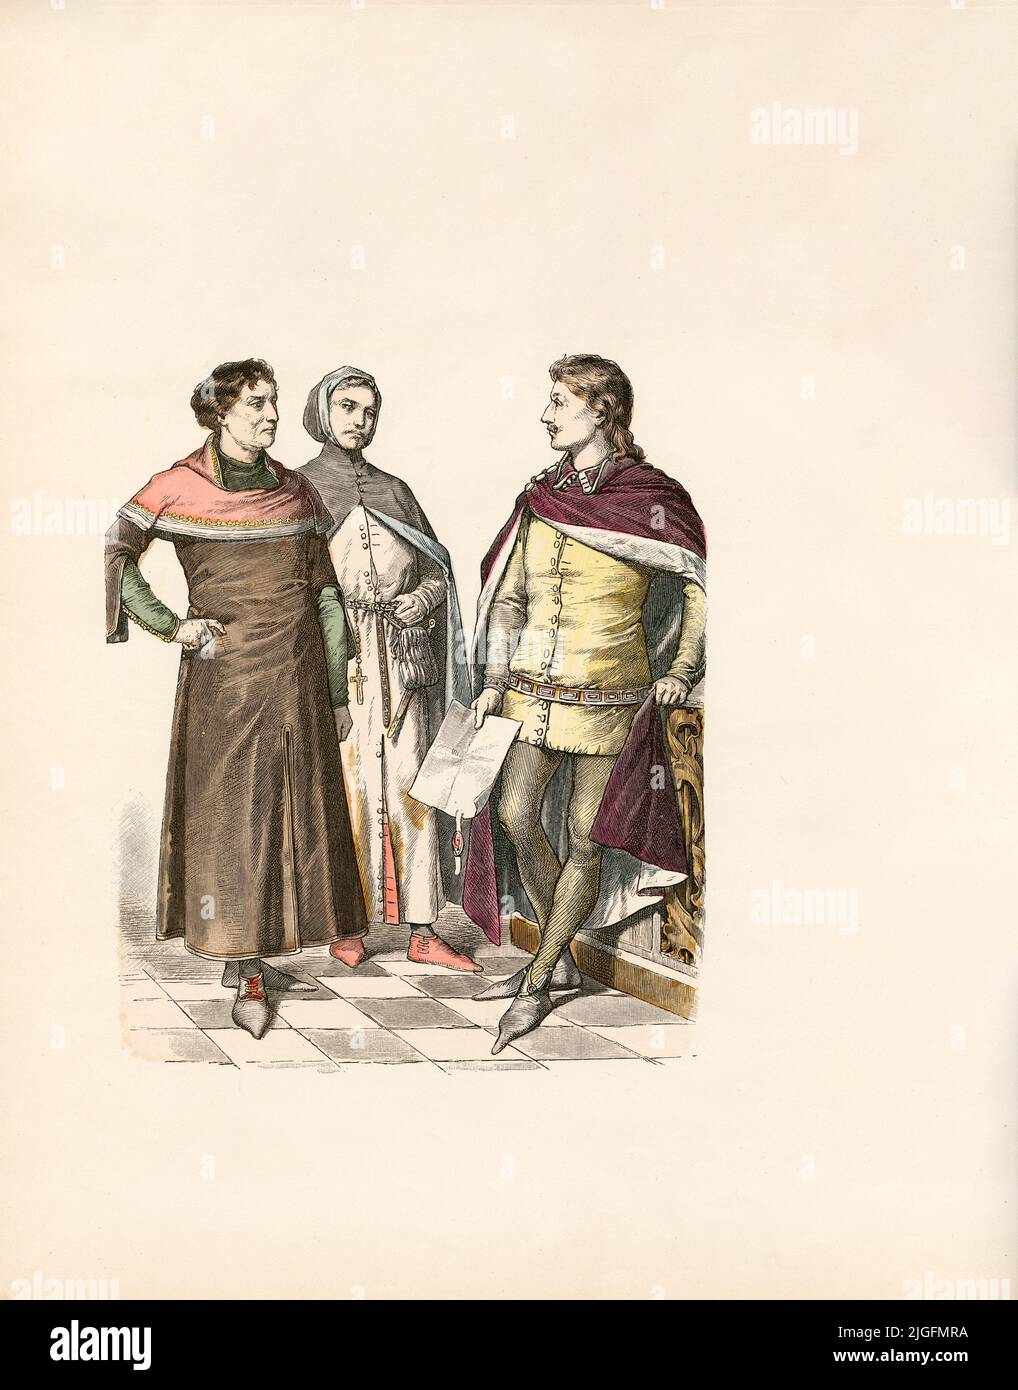 Vestido Medieval MM188